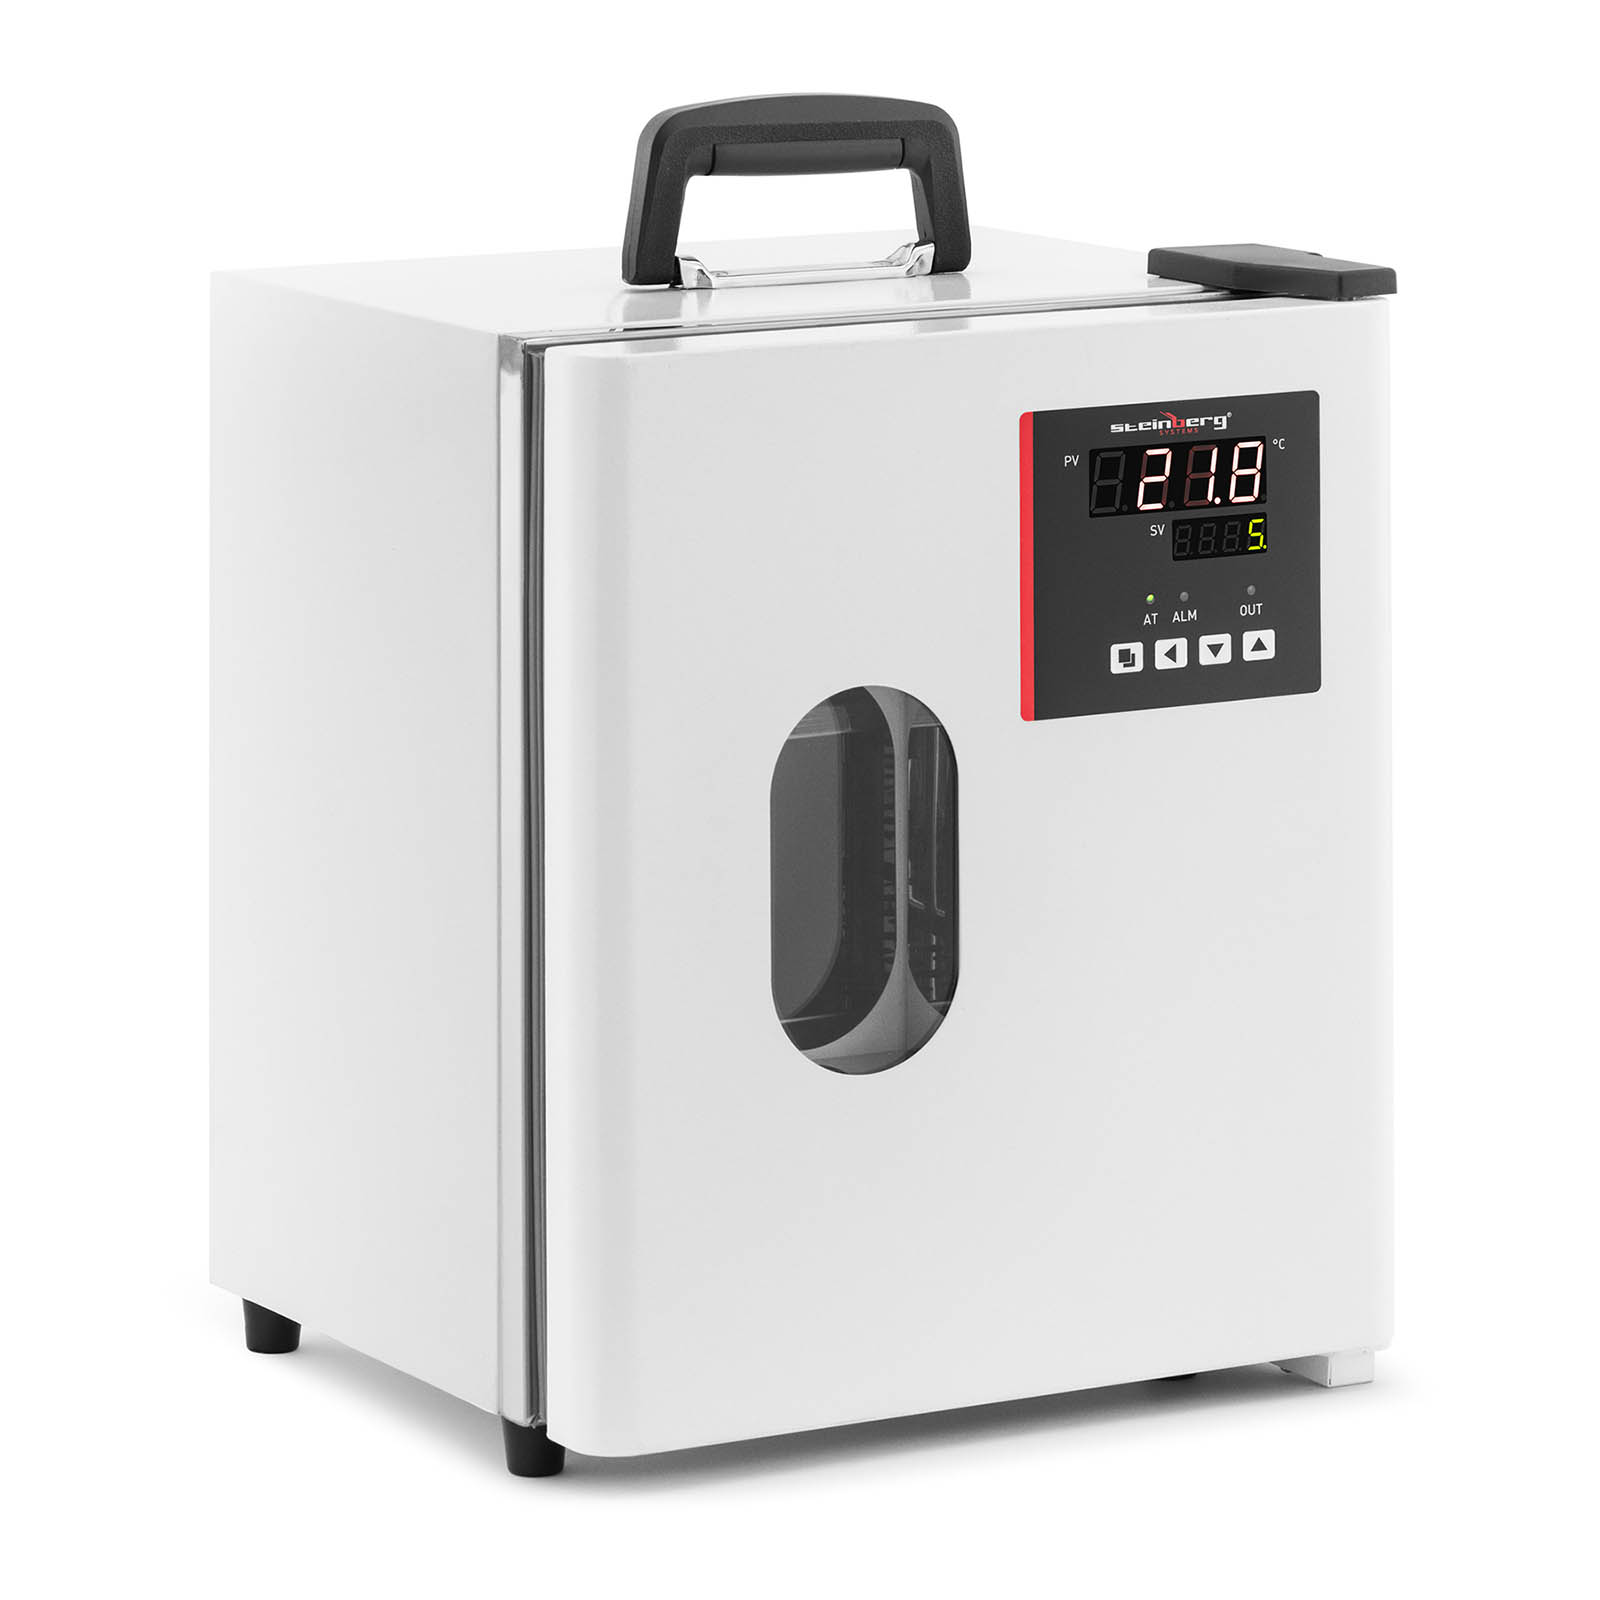 Incubadora de laboratorio - temperatura ambiente + 5 - 65 °C - 12,8 L